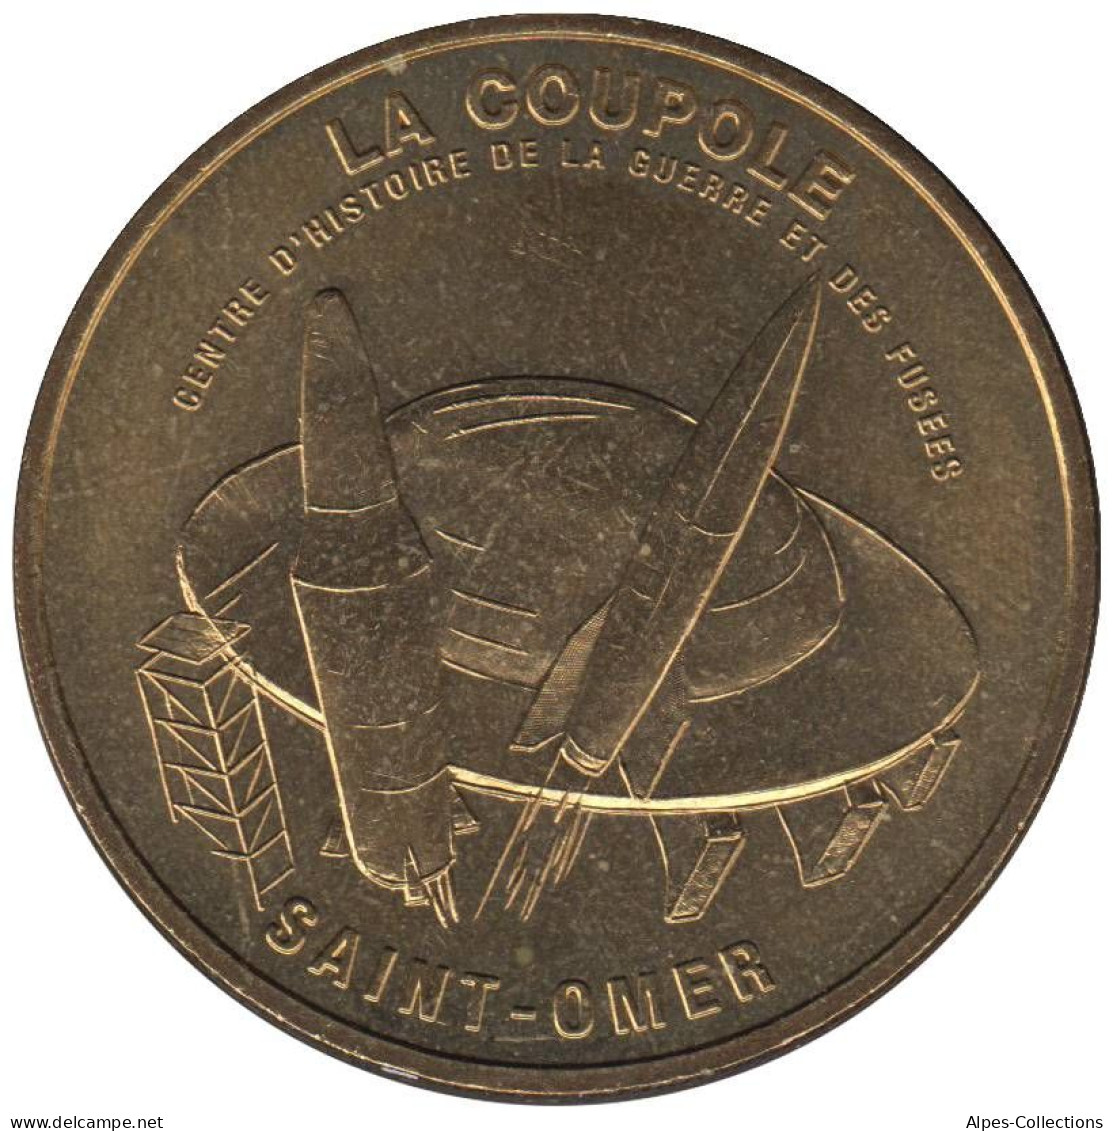 62-0181 - JETON TOURISTIQUE MDP - Saint-Omer - La Coupole Fusées V1-V2 - 2004.1 - 2004